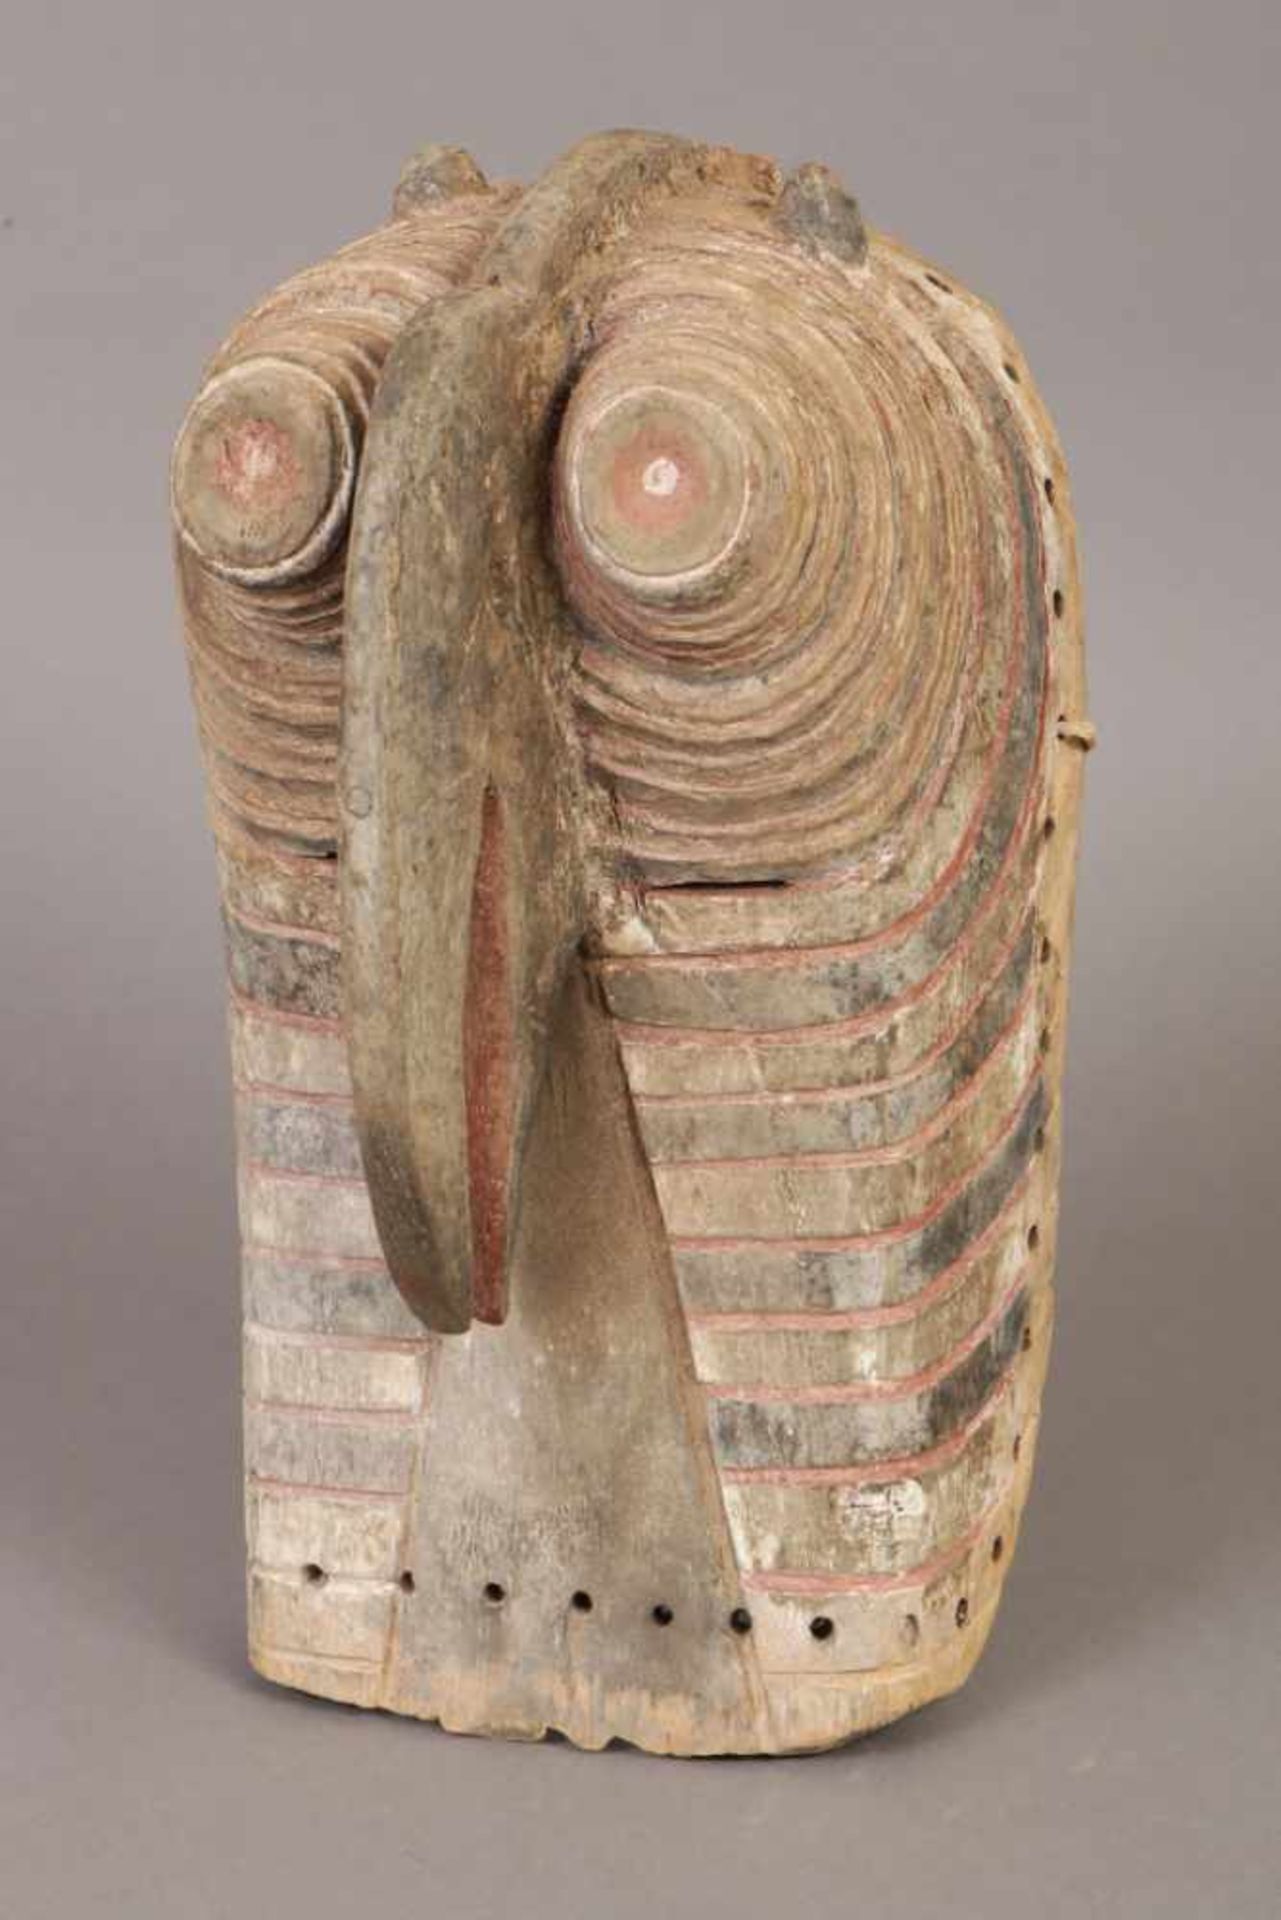 Tanz-/Ritualmaske Holz, rot-weiß-braun patiniert, wohl Songye, Kongo, wohl um 1920/30, hohe Maske